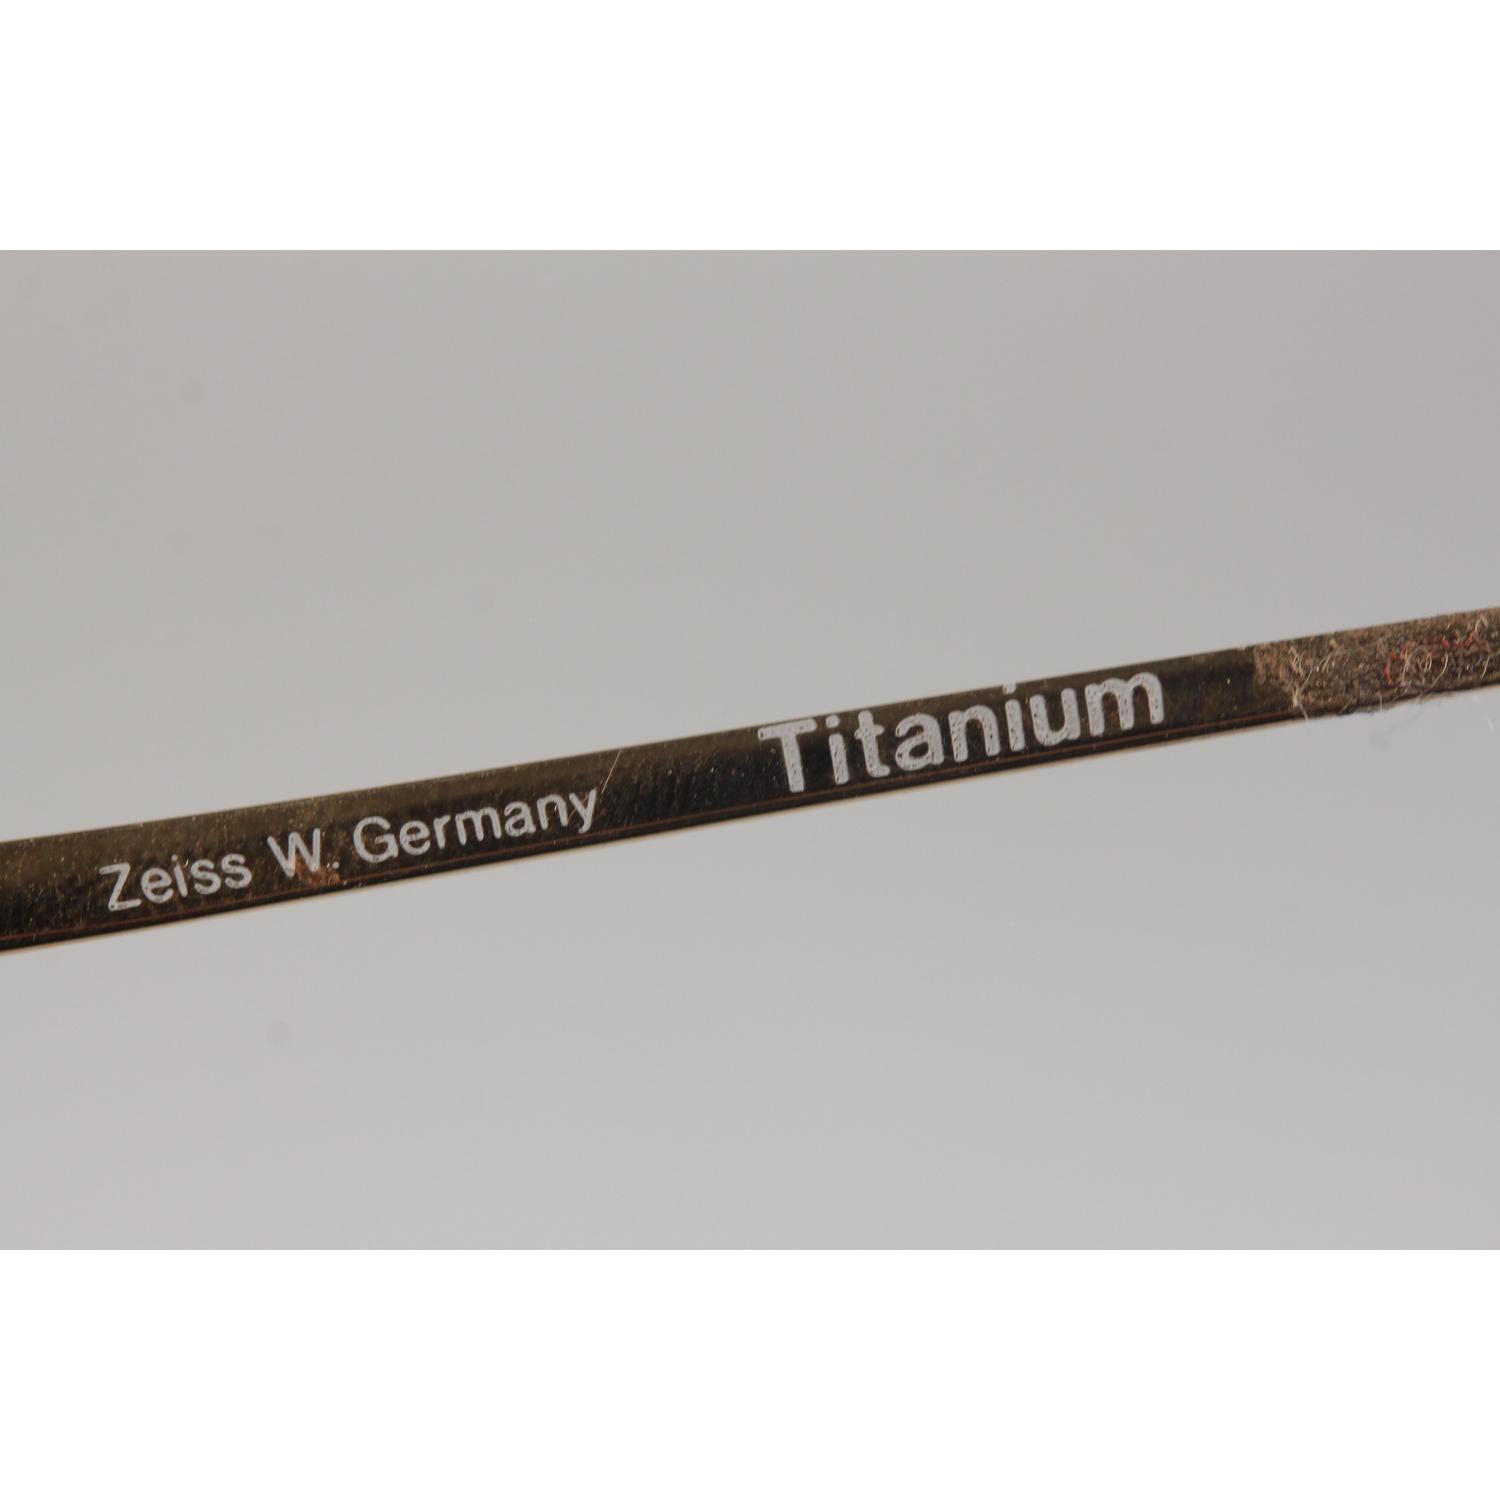 Zeiss Vintage Carat Titanium Gold Mens Sunglasses 5959 New Old Stock 1